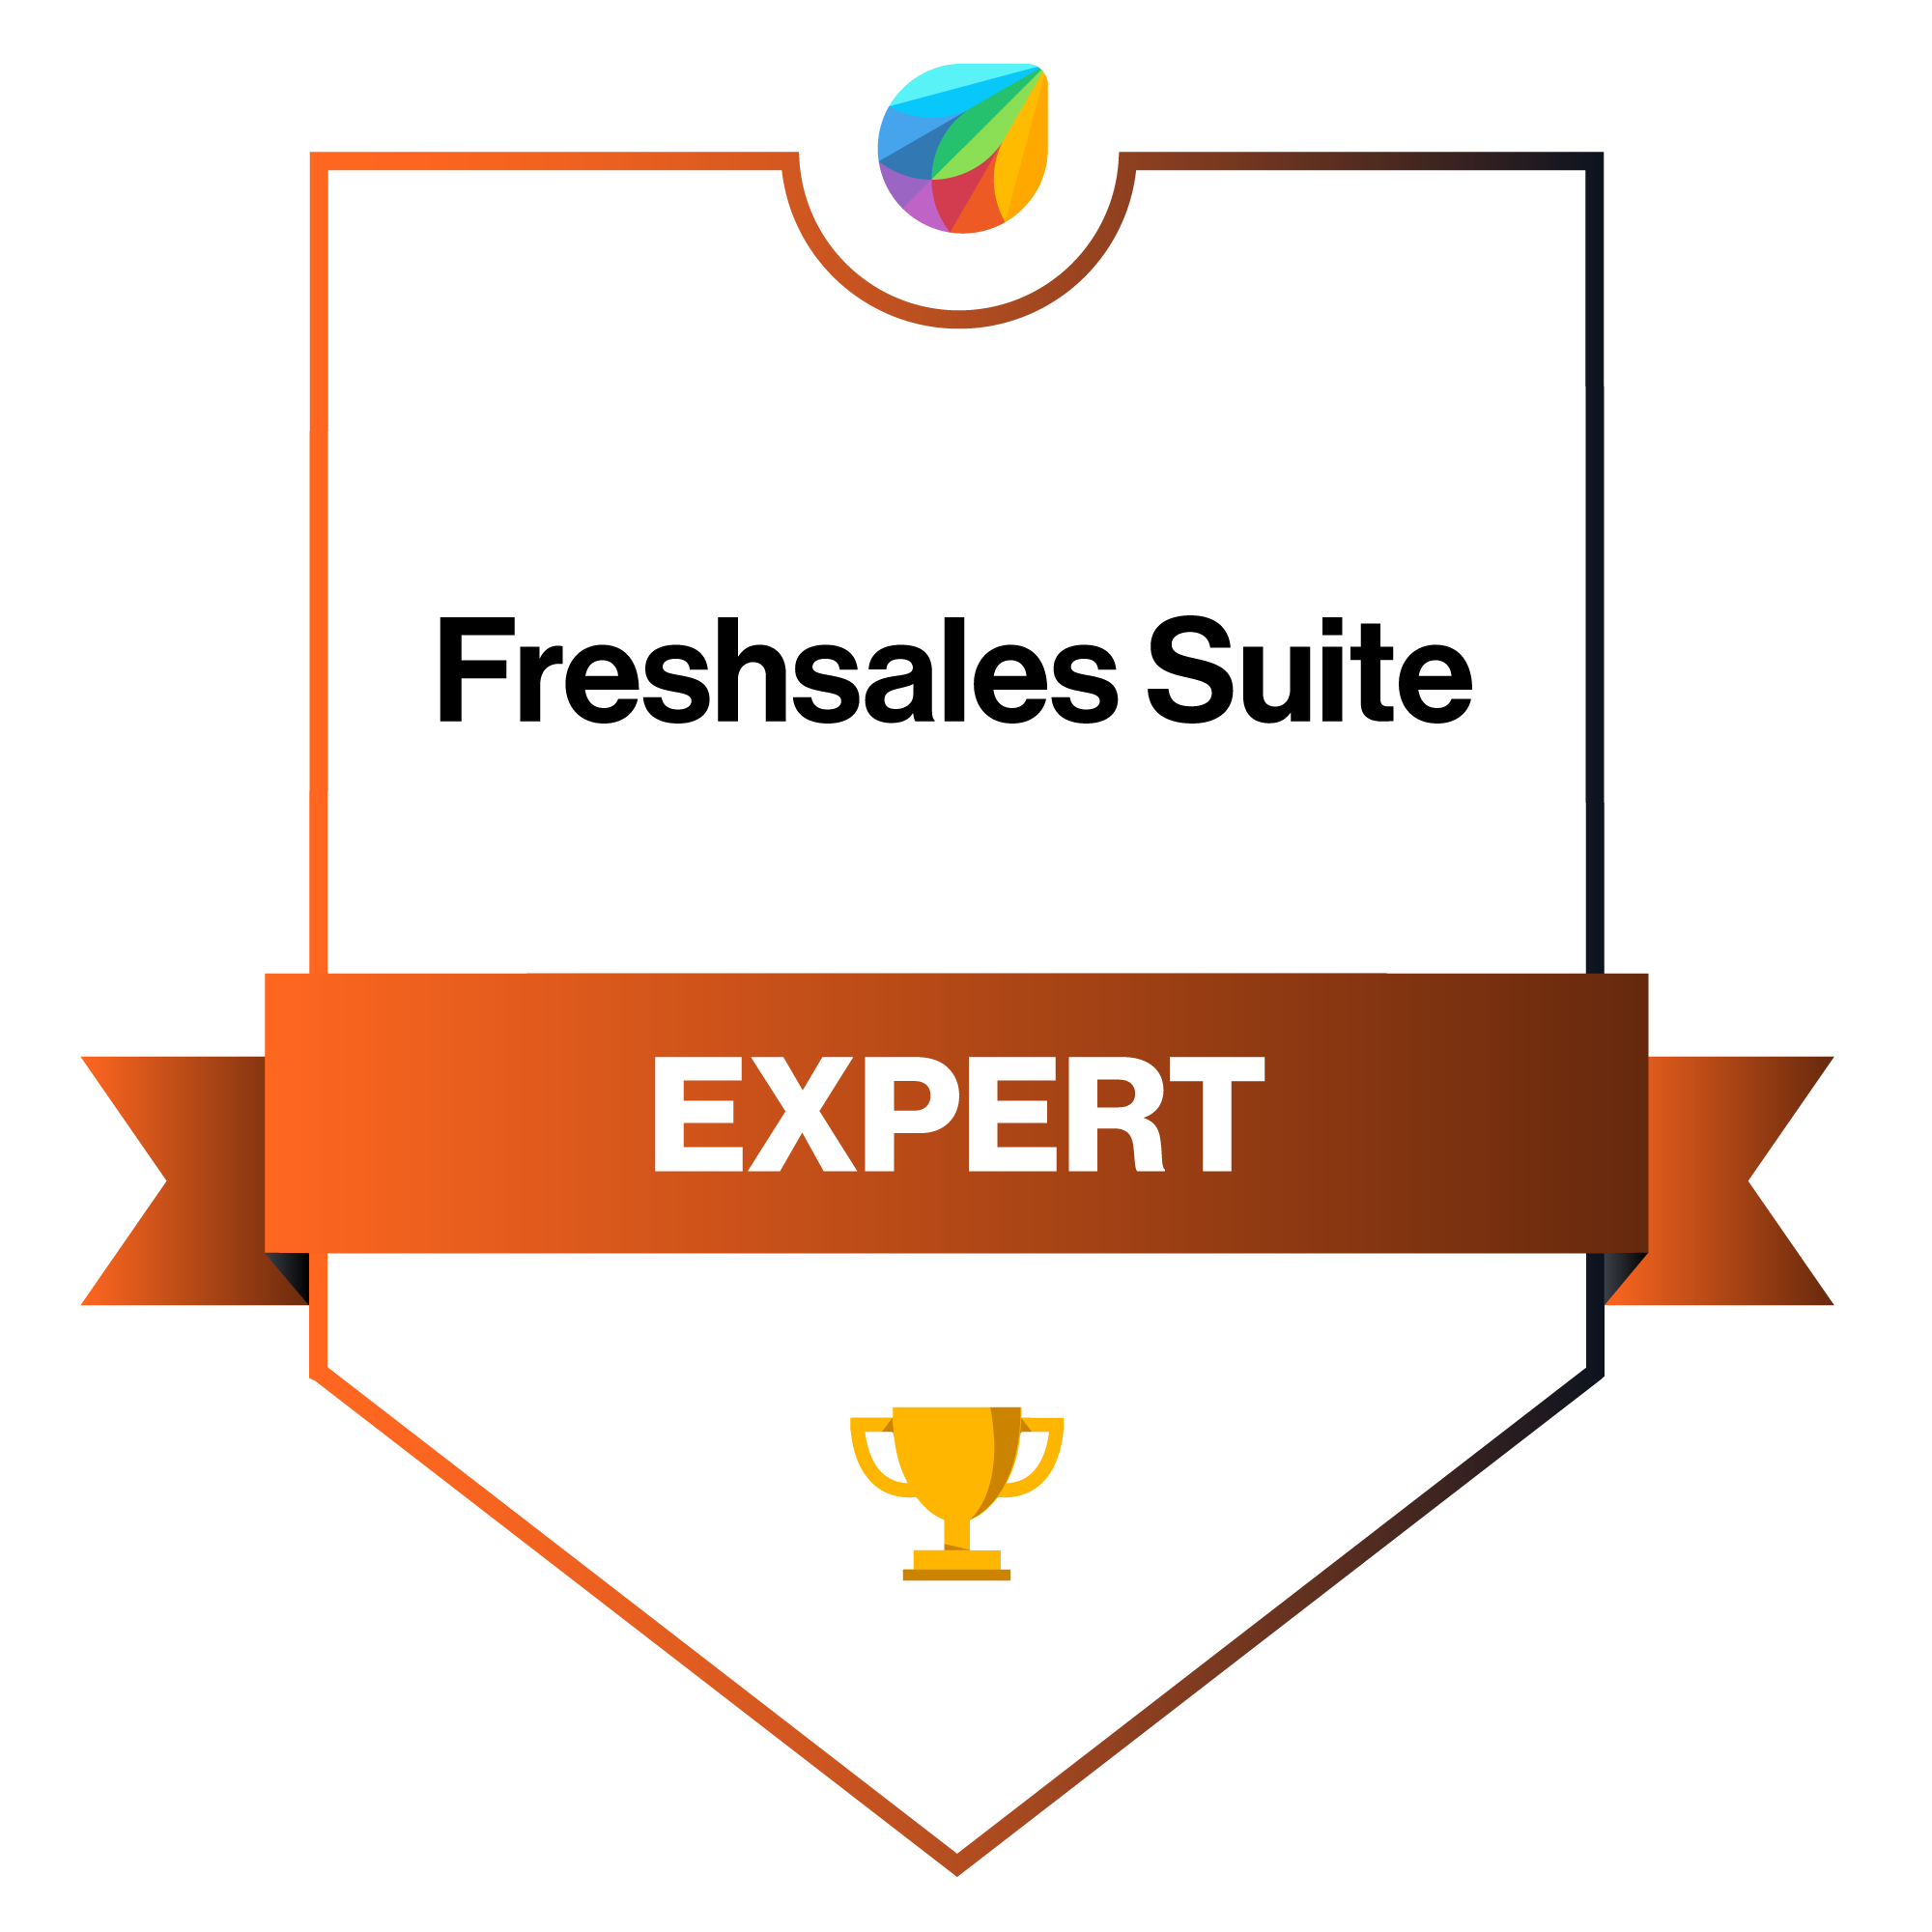 freshsales-suite-expert-certification